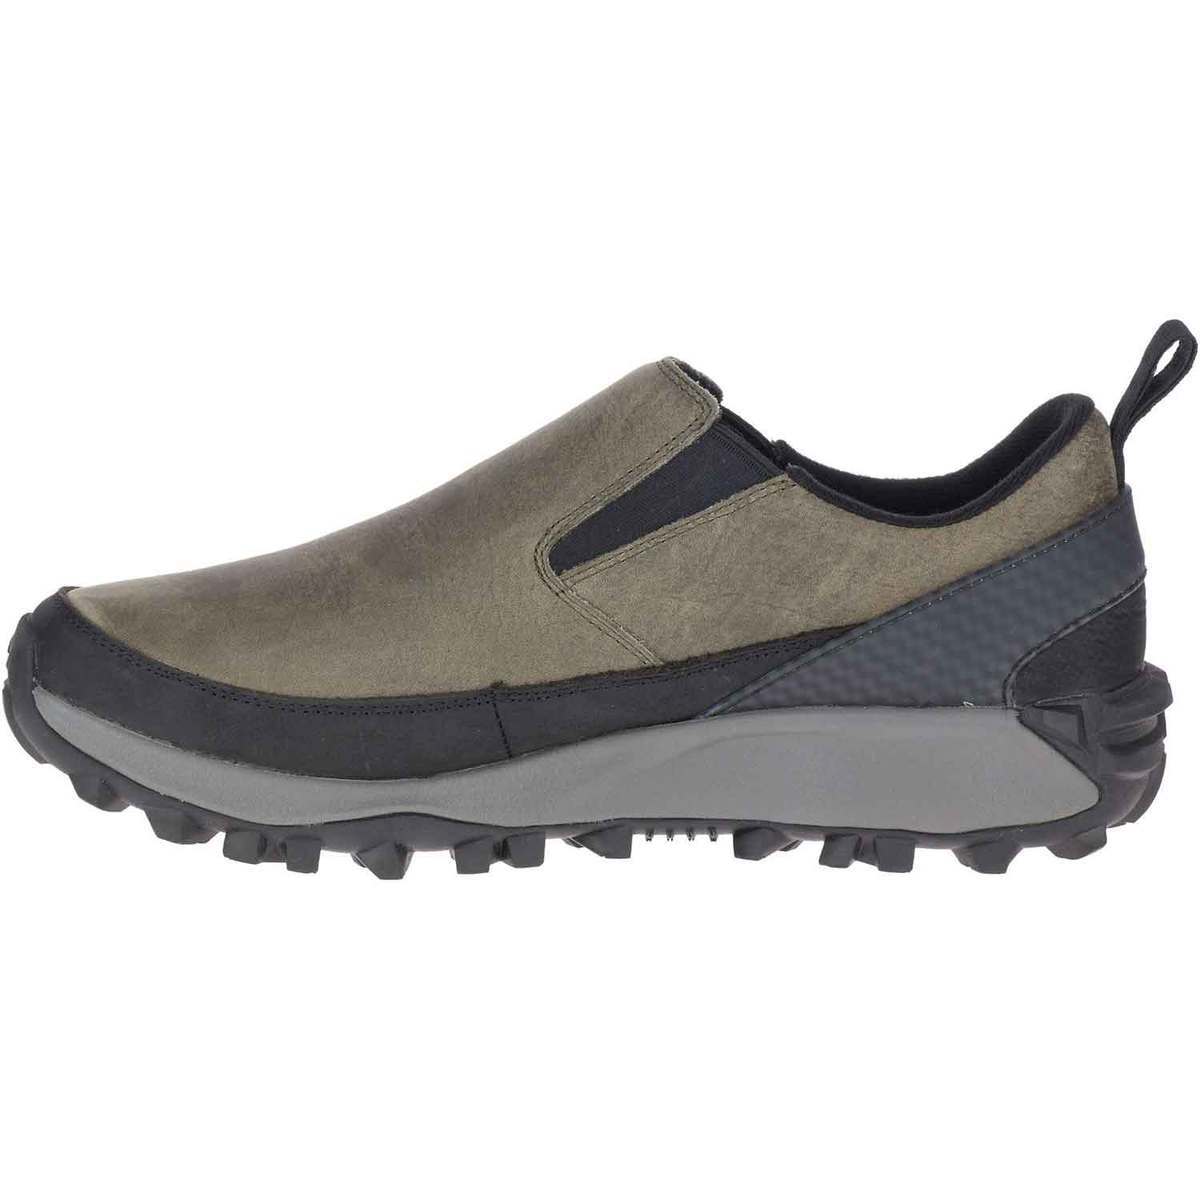 Merrell Men's Thermo Kiruna Casual Shoes - Merrell Gray - Size 9.5 ...